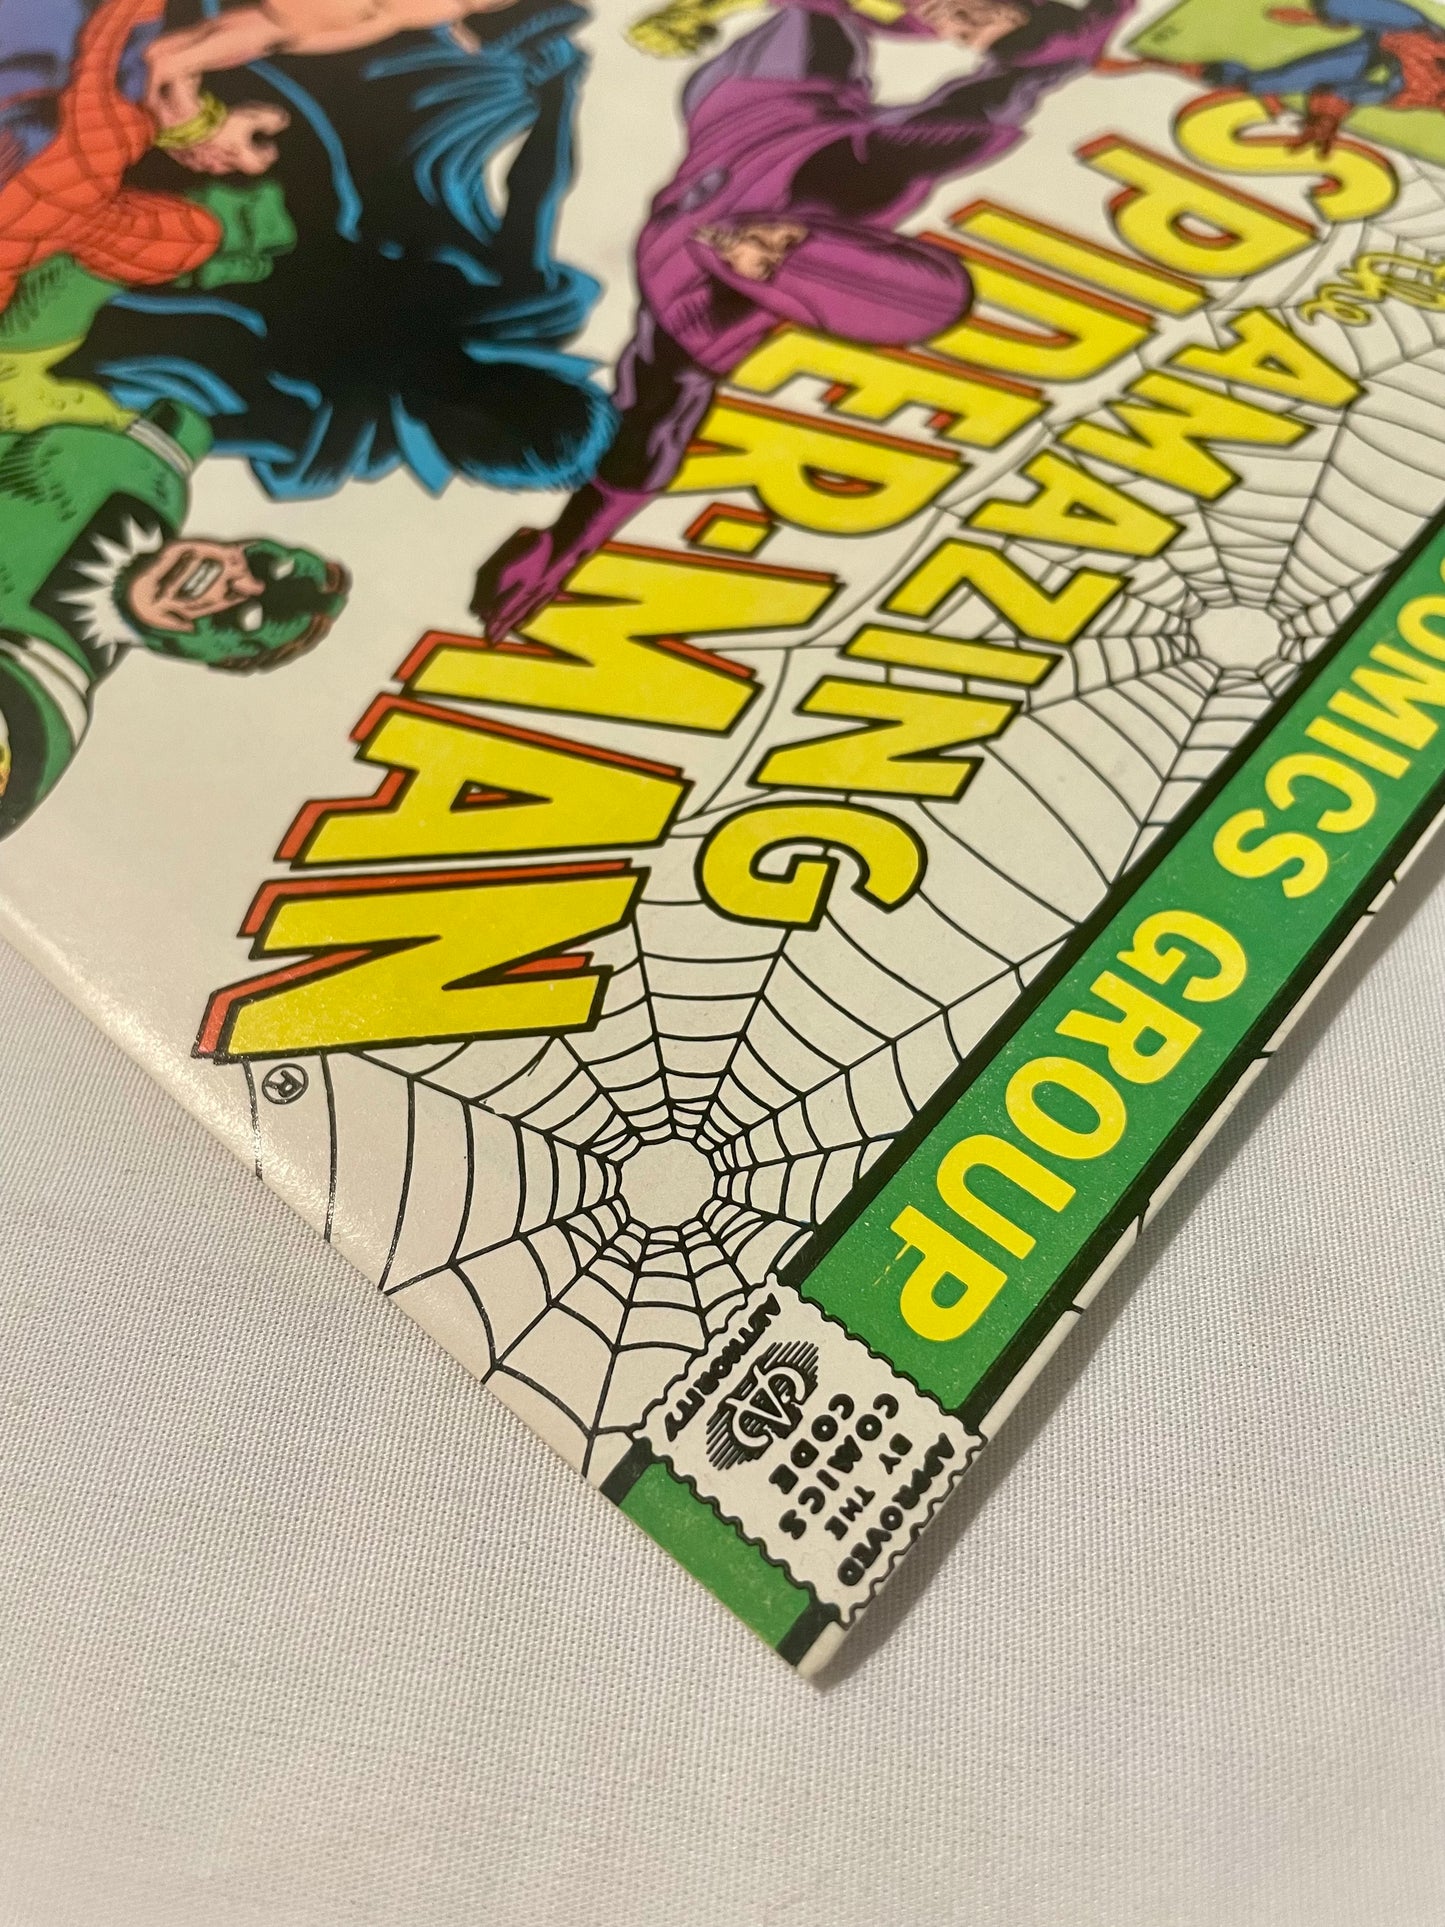 Marvel Comics: The Amazing Spider-Man #214